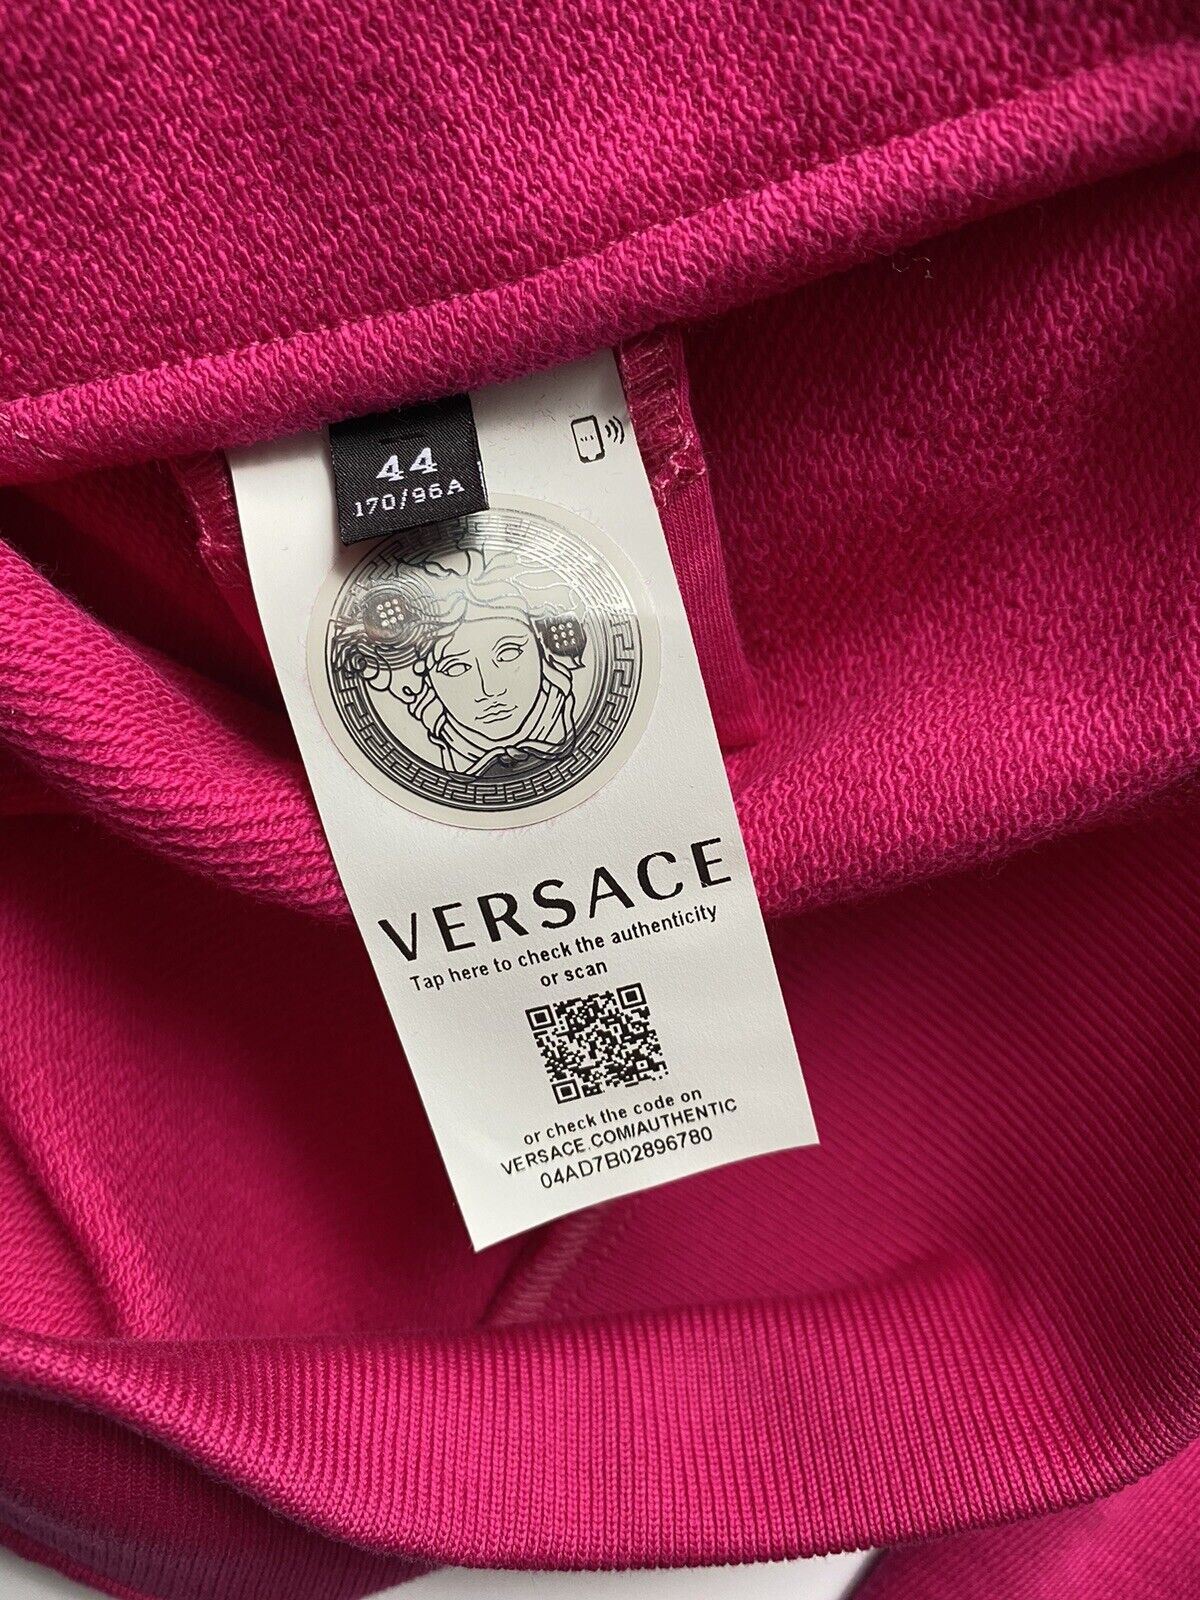 NWT 950 $ Versace Medusa Hooded Pink Jacket für Damen 10 US (44 Euro) A231242 IT 